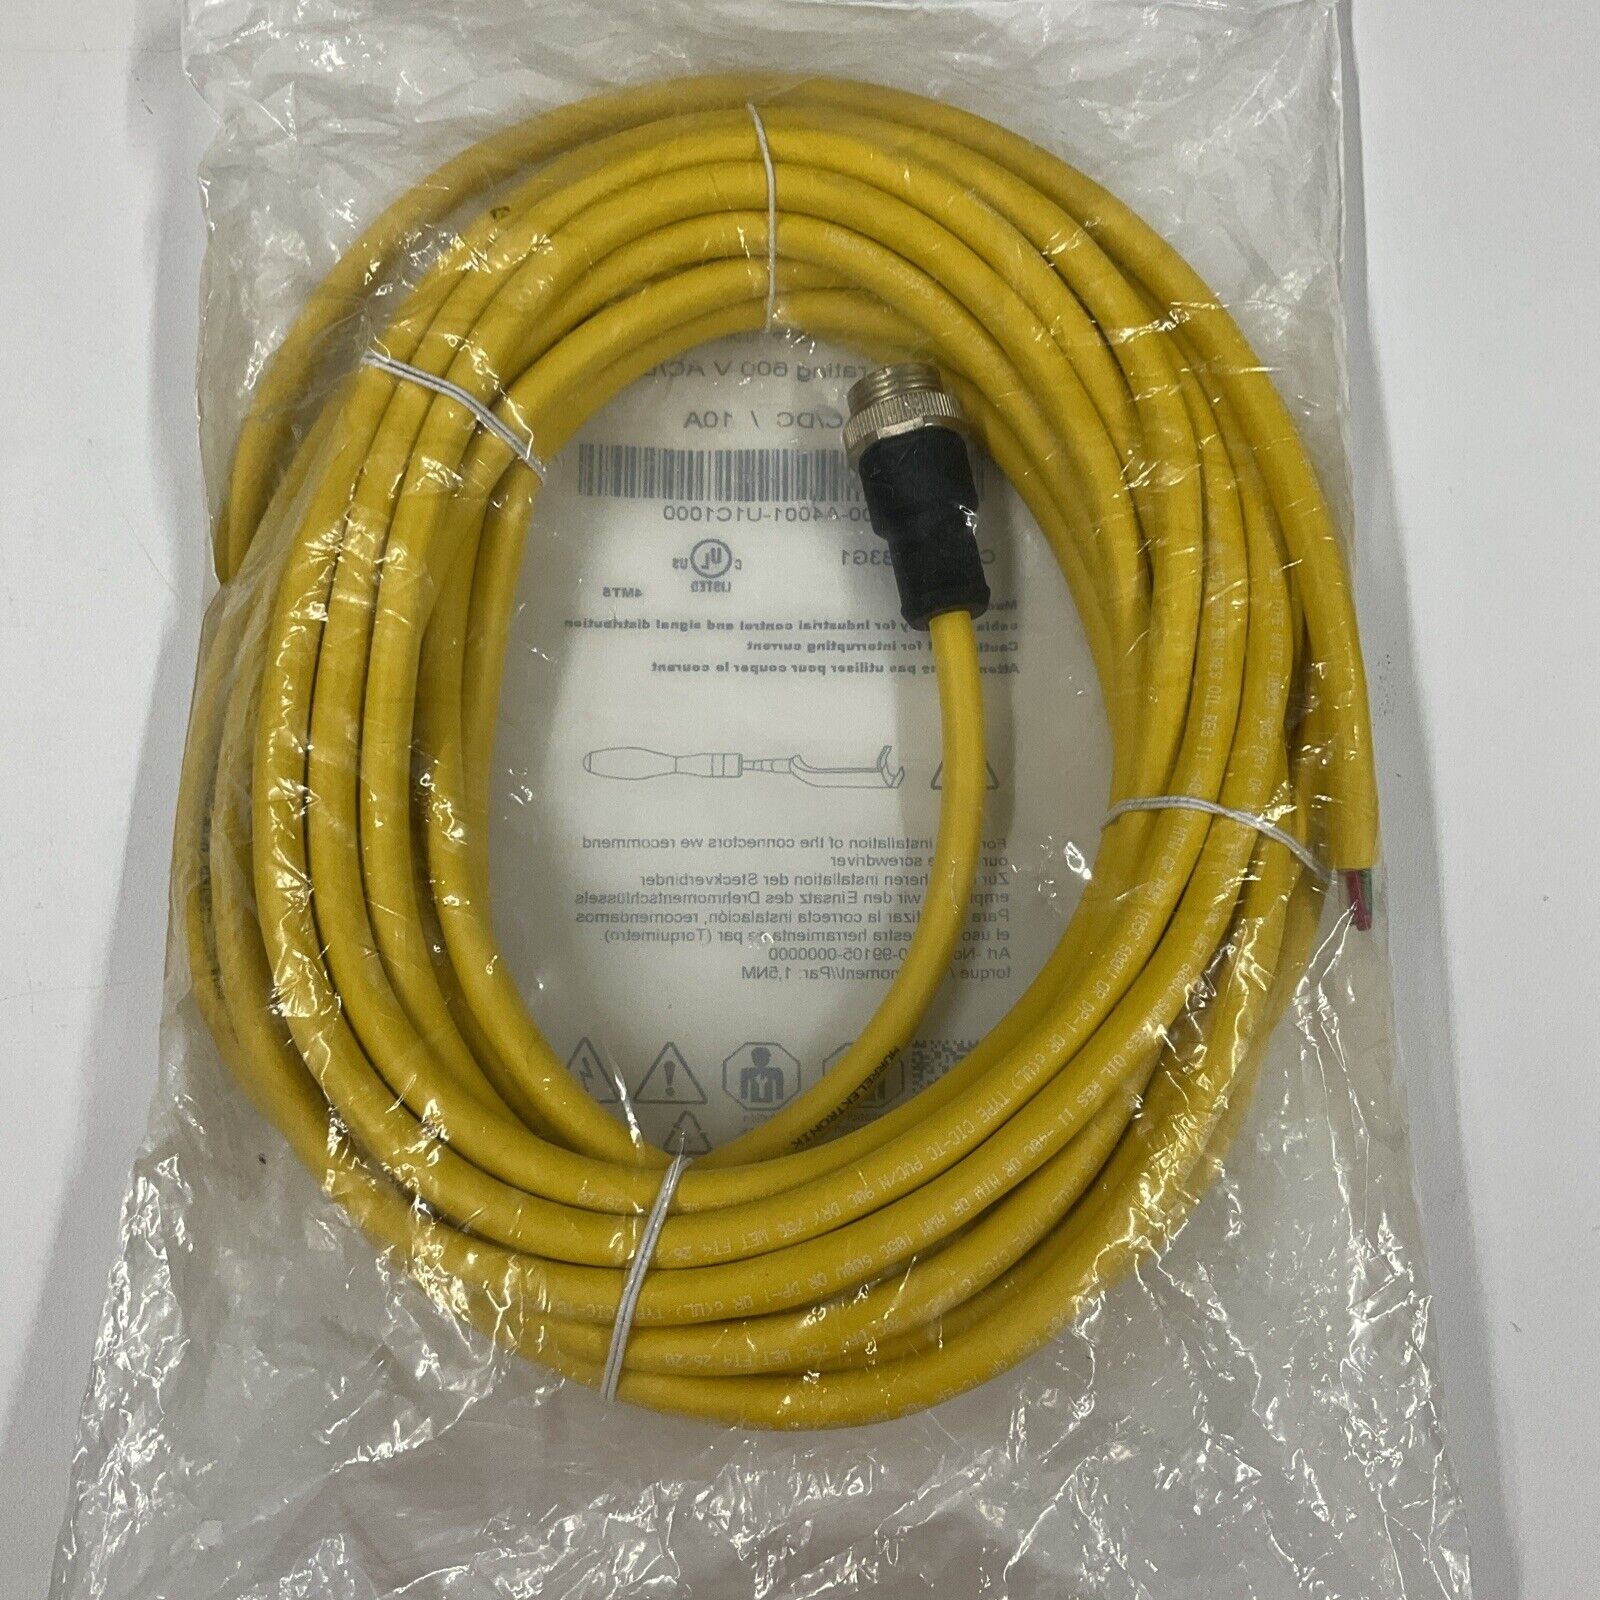 Murr 7700-A4001-U1C1000 Mini 7/8" 4-Pole, Male Power Cable 10 Meters (CBL145) - 0